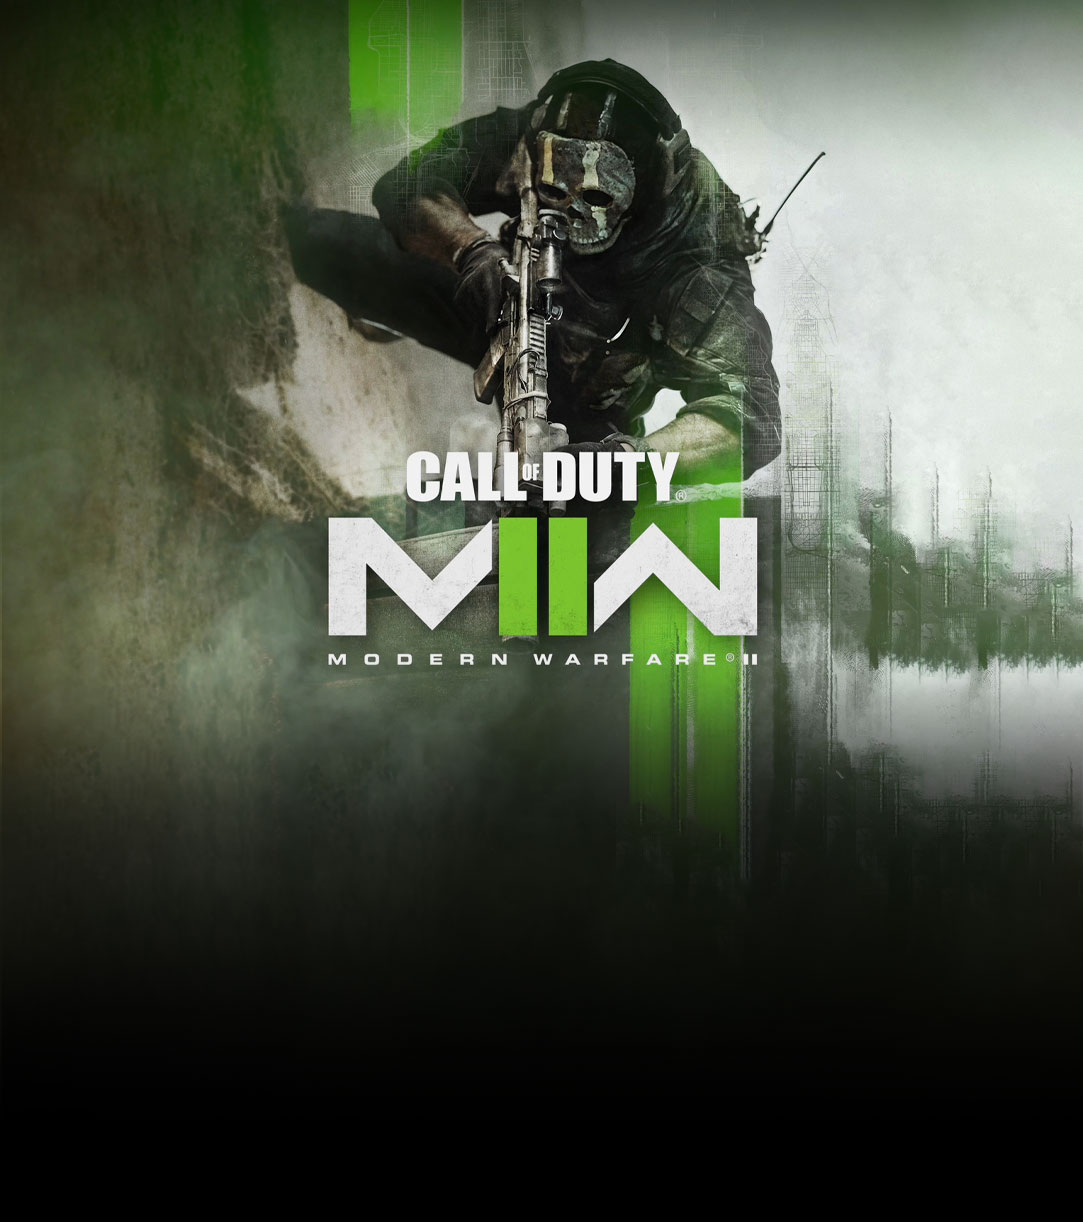 Call of Duty: Modern Warfare II, An operator crouches in preparation.